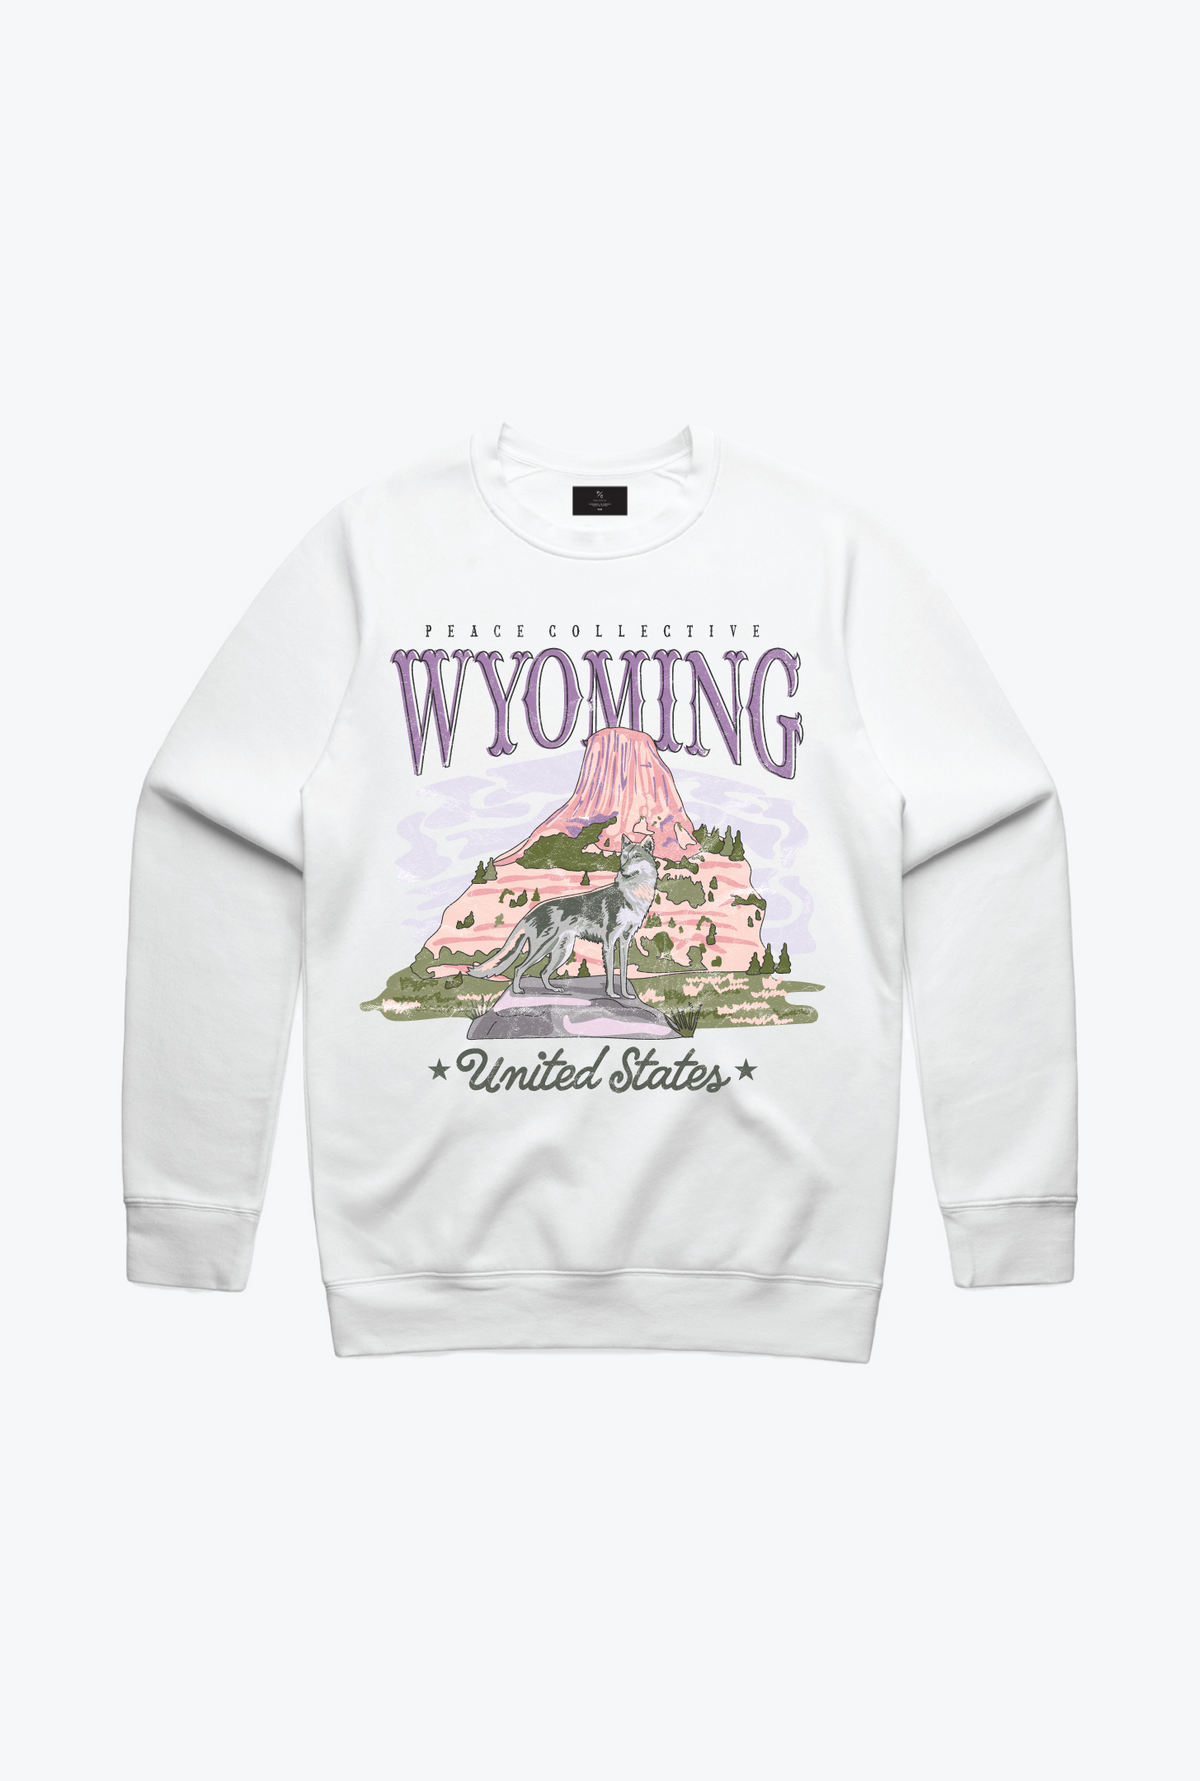 Wyoming Vintage Crewneck - White